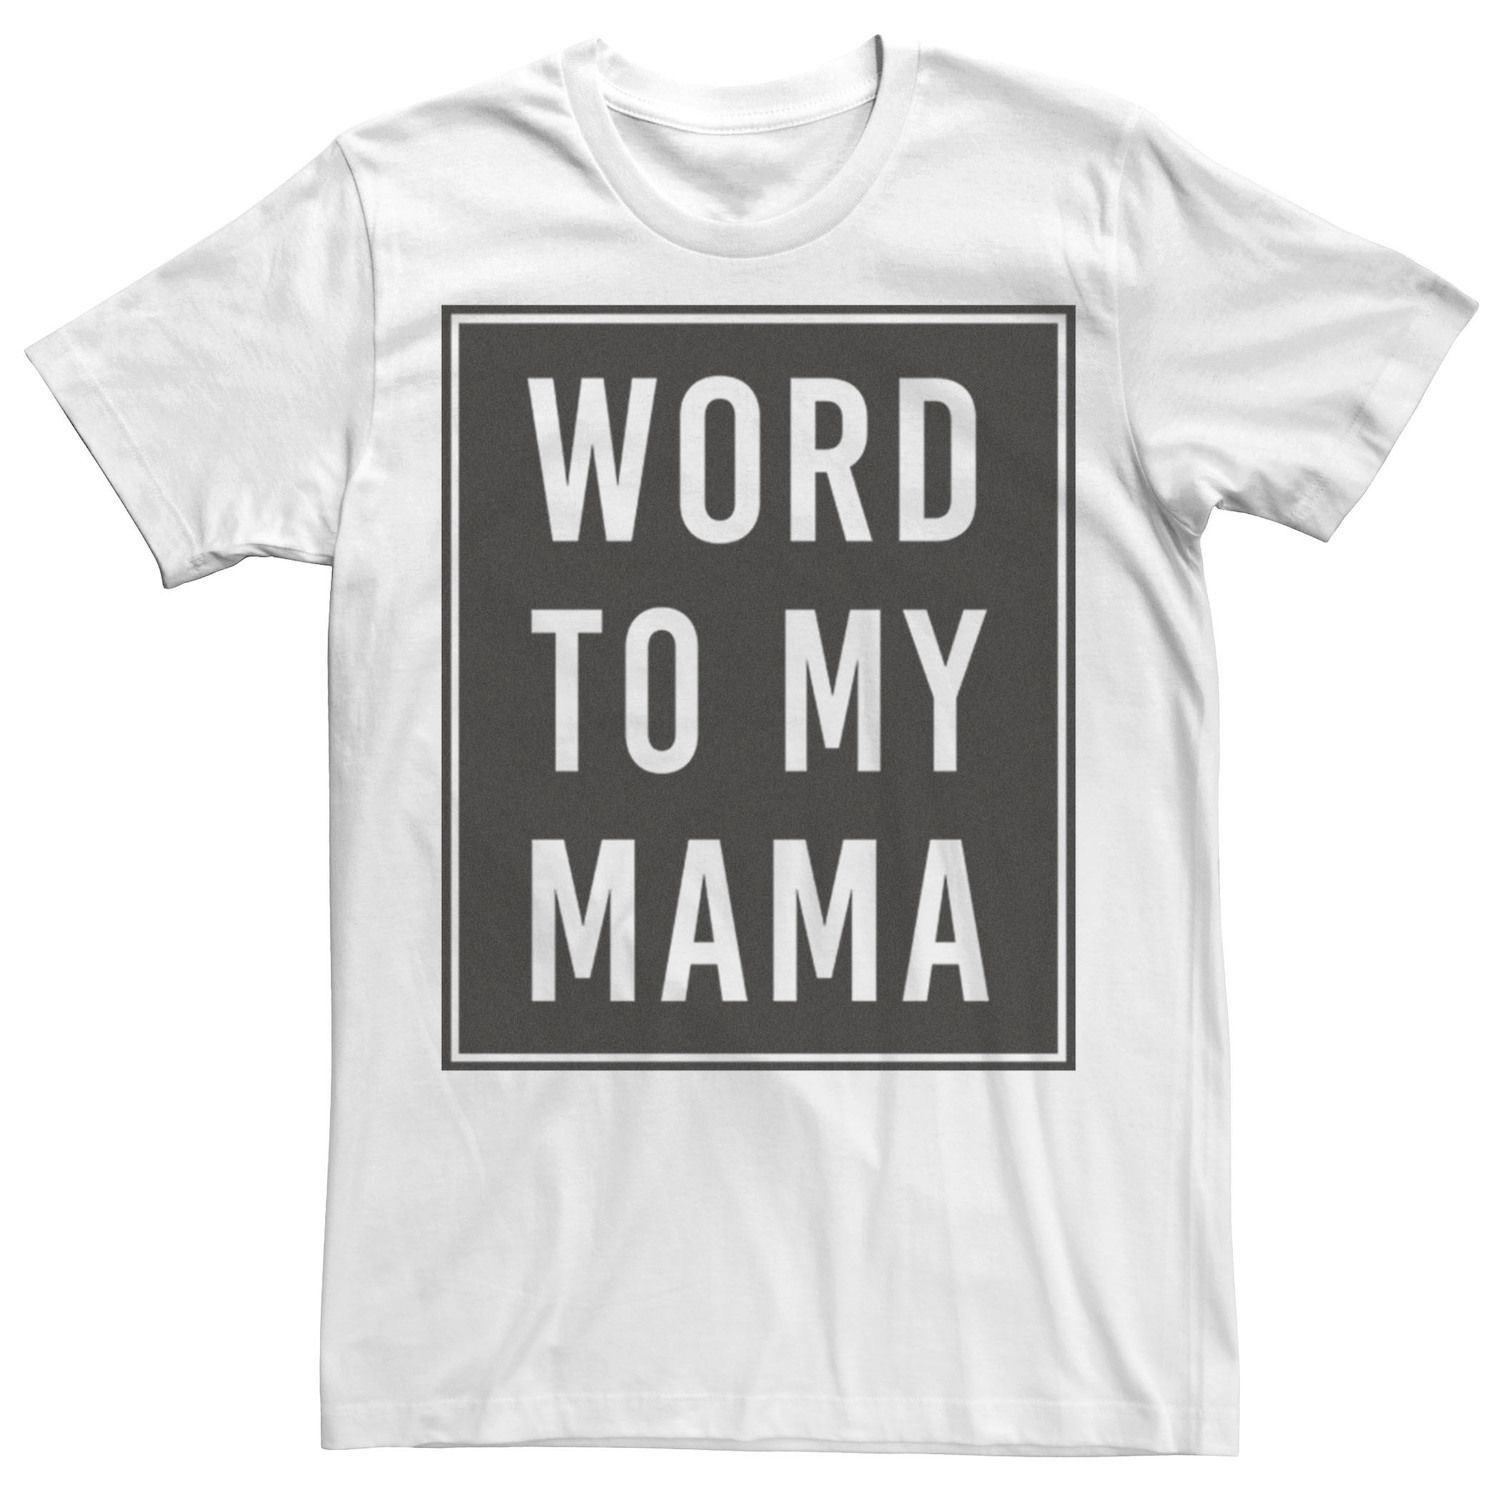 Мужская футболка Word To My Mama с черным плакатом ко Дню матери Licensed Character